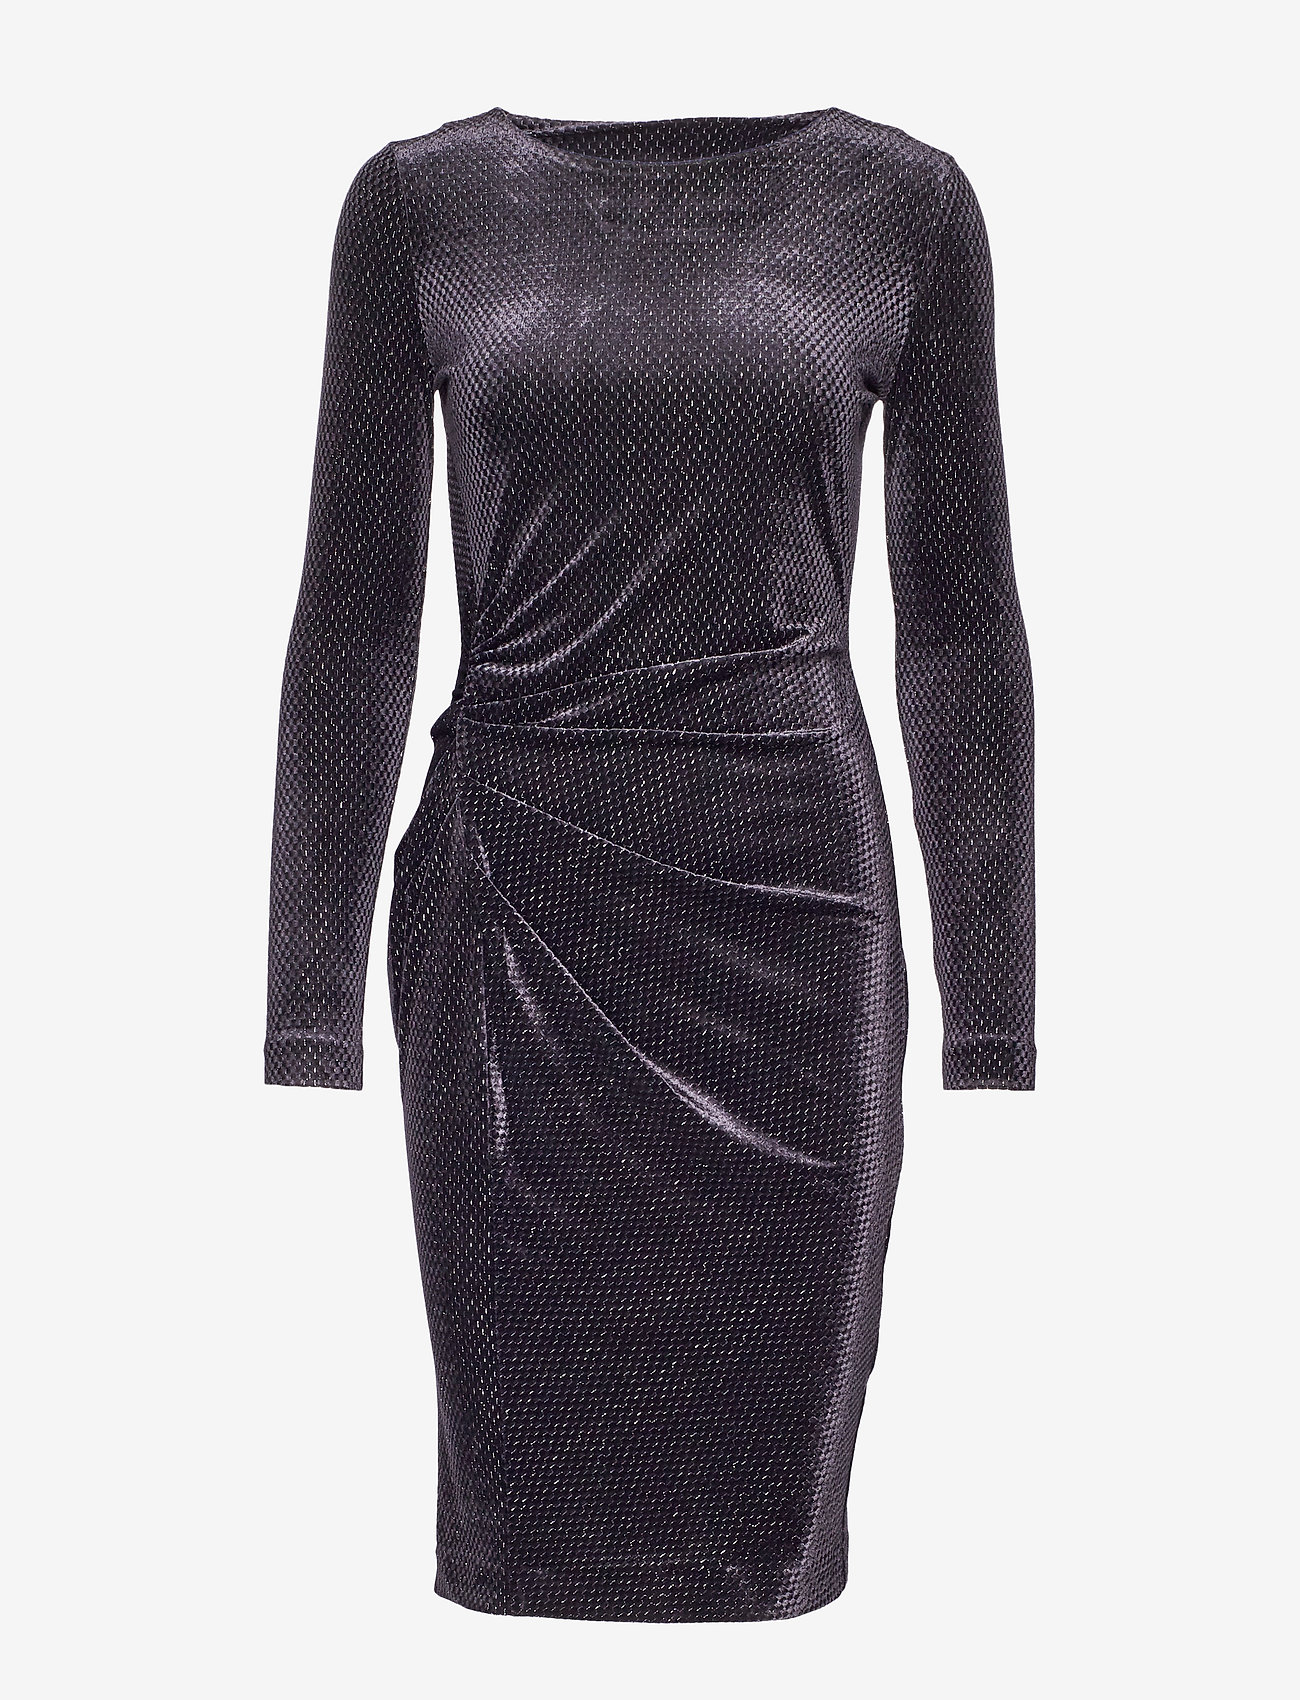 InWear - OnoIW Drape Dress - tettsittende kjoler - black - 0